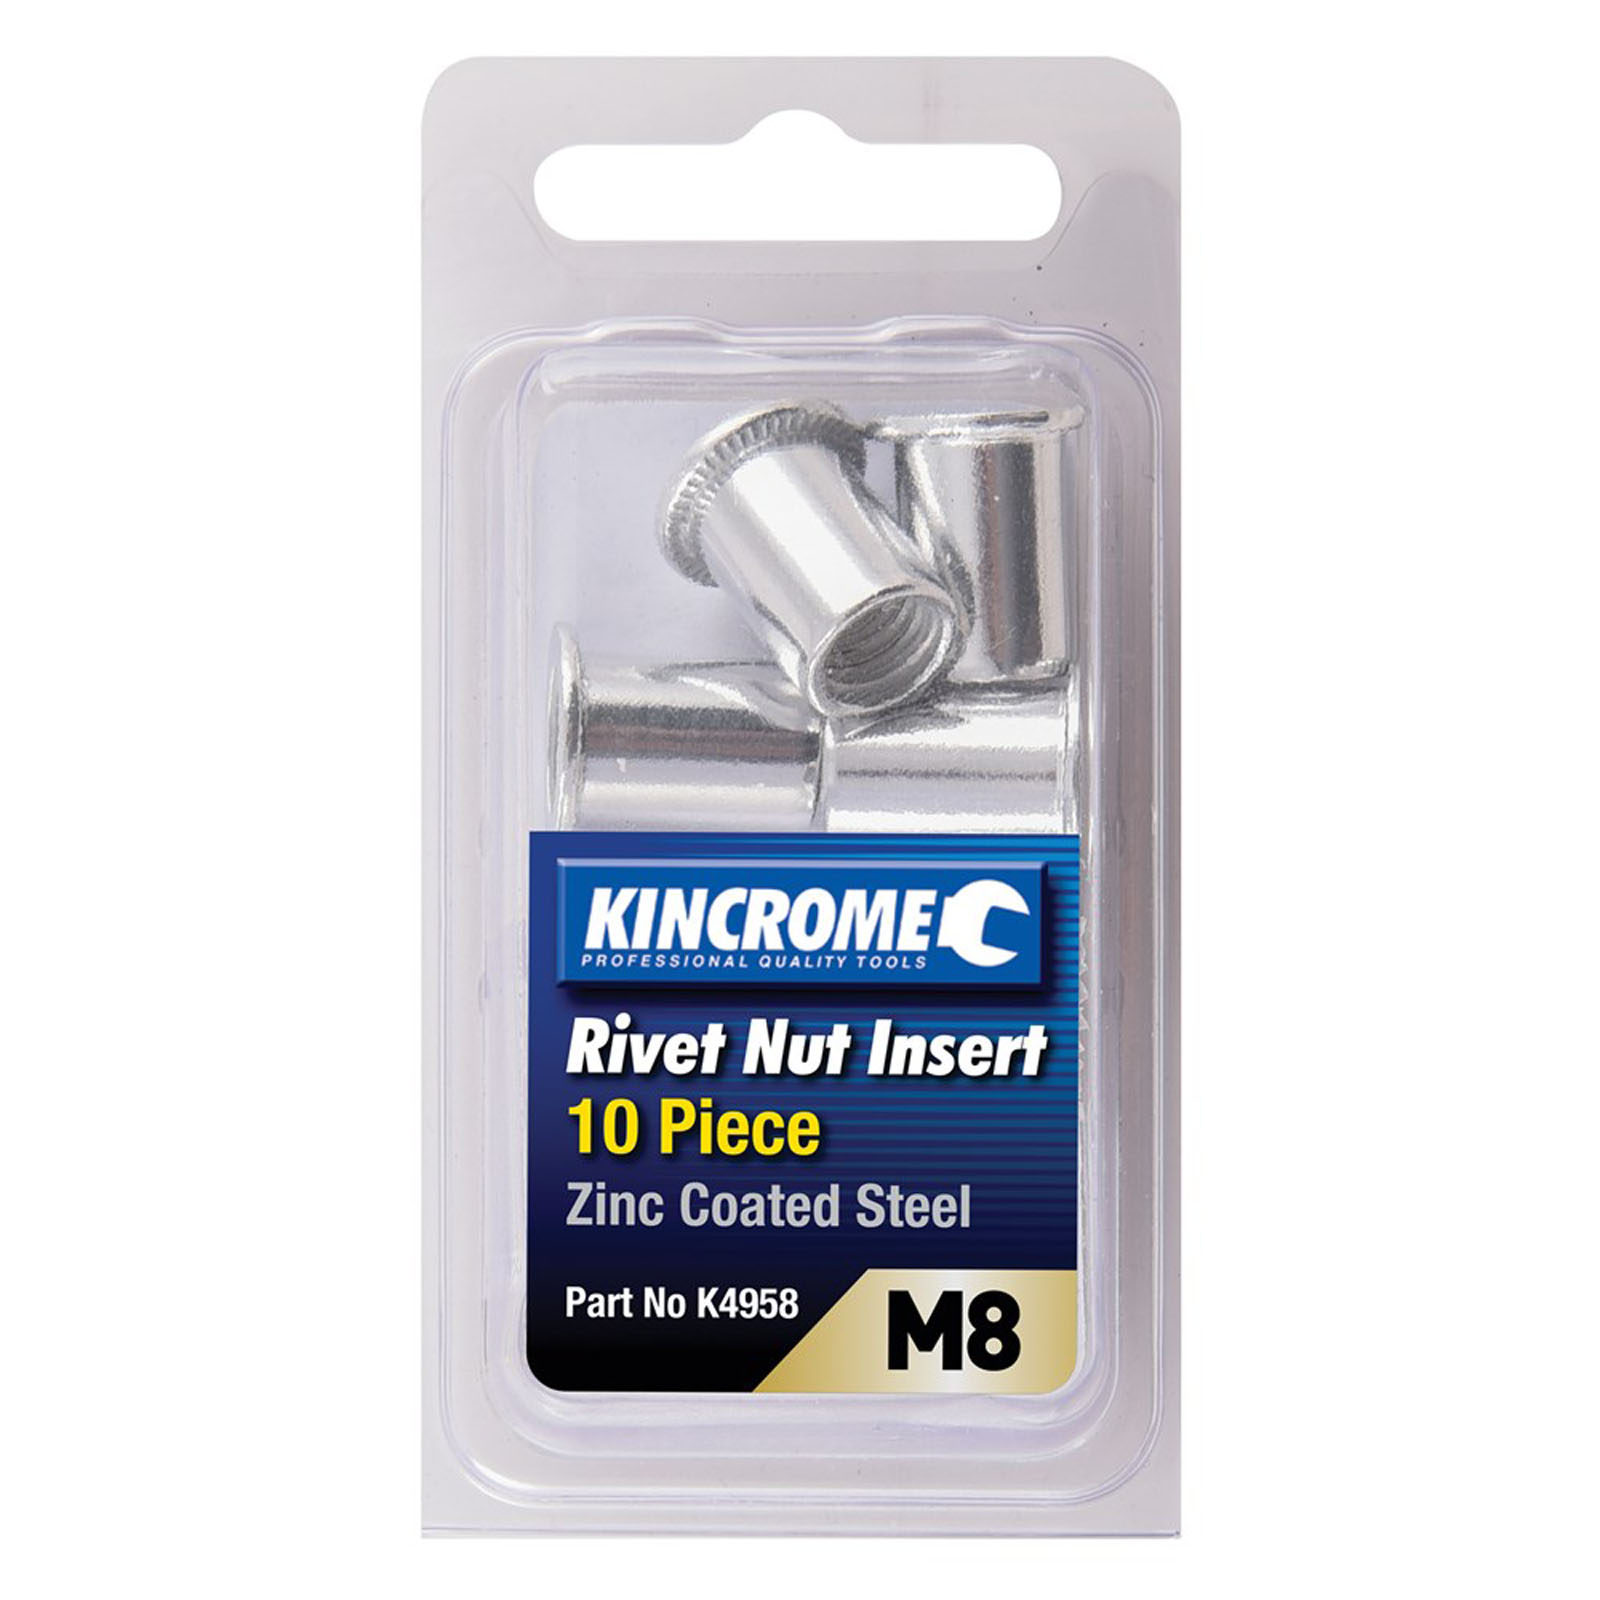 Rivet Nut Insert M8 (Zinc Coated Steel) - 10 Pack - Kincrome Tools -  Kincrome